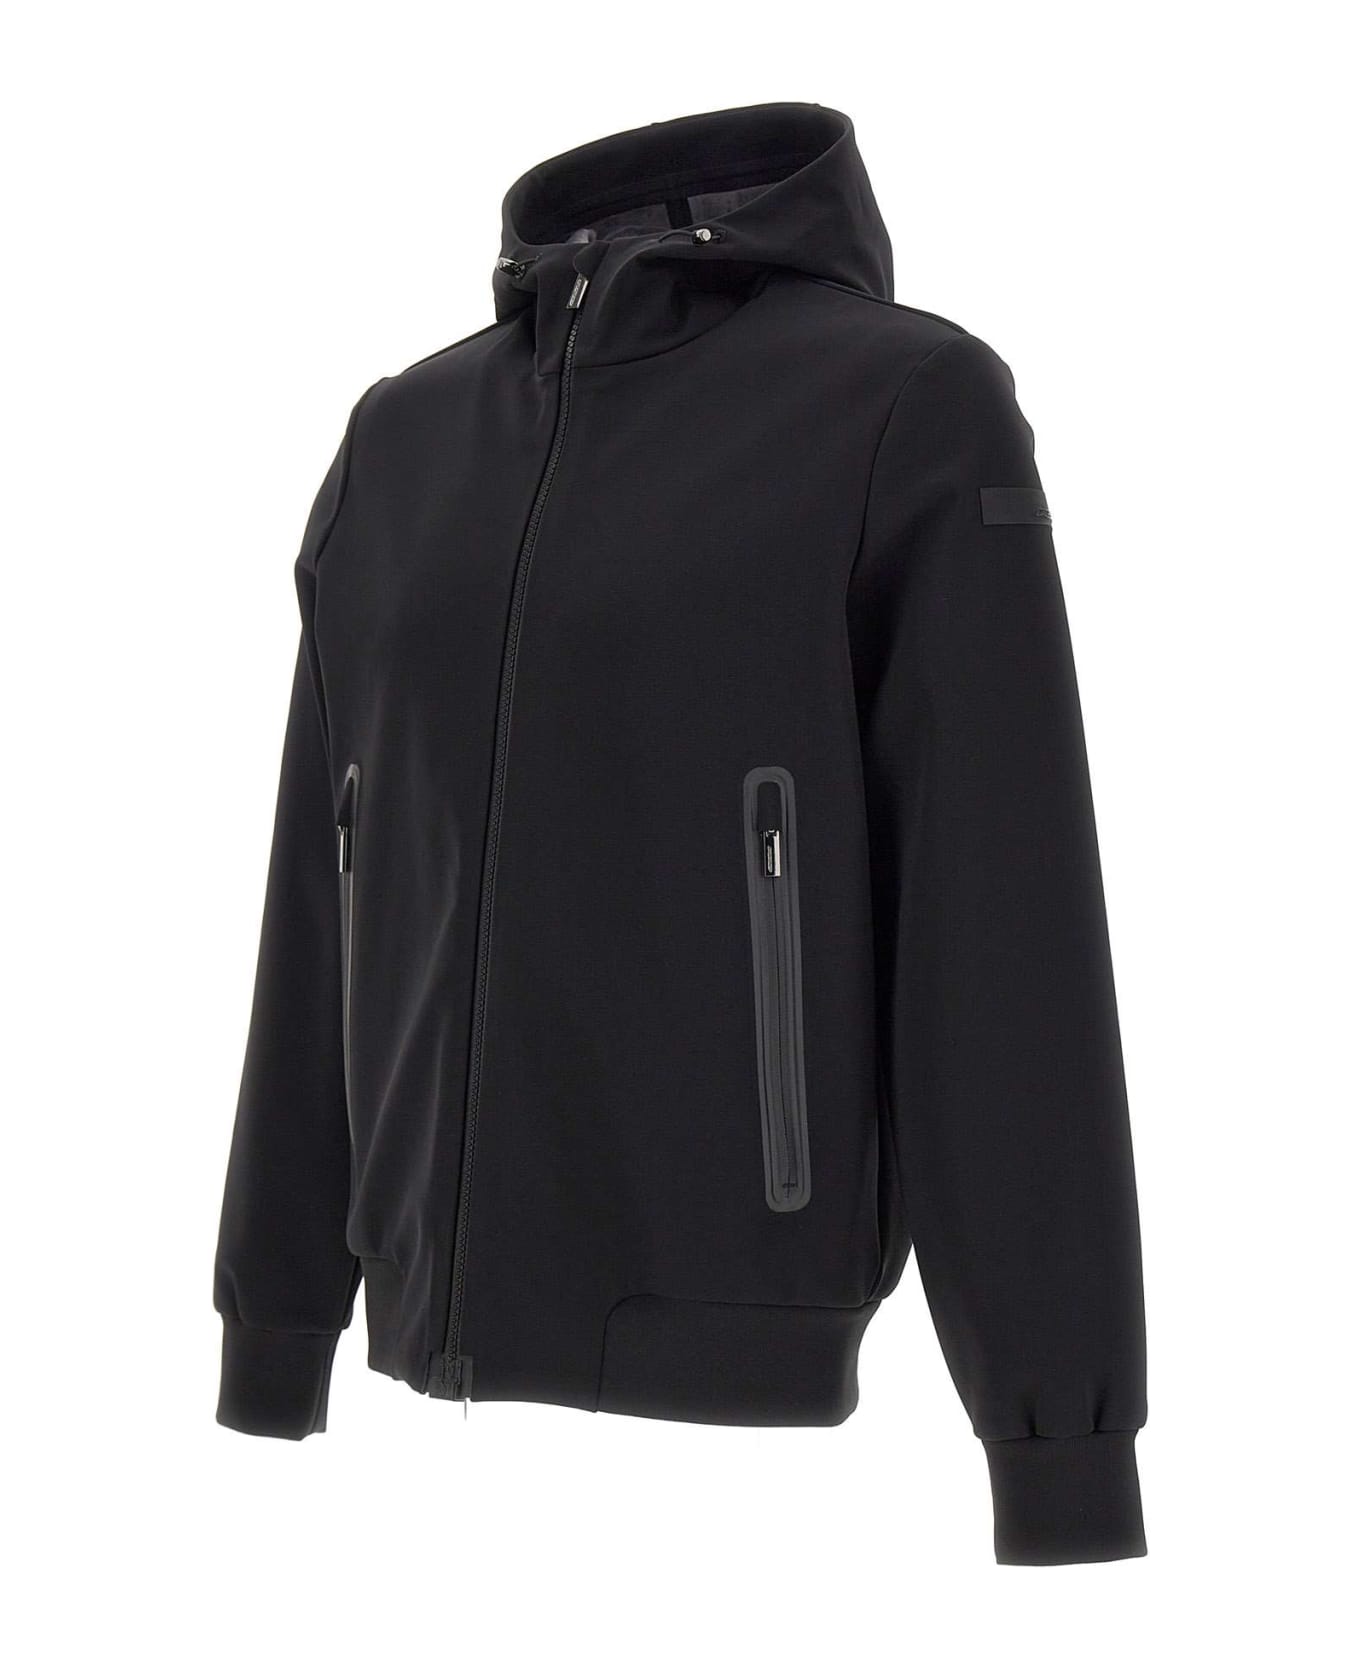 RRD - Roberto Ricci Design 'winter Thermo Hood' Jacket - Black